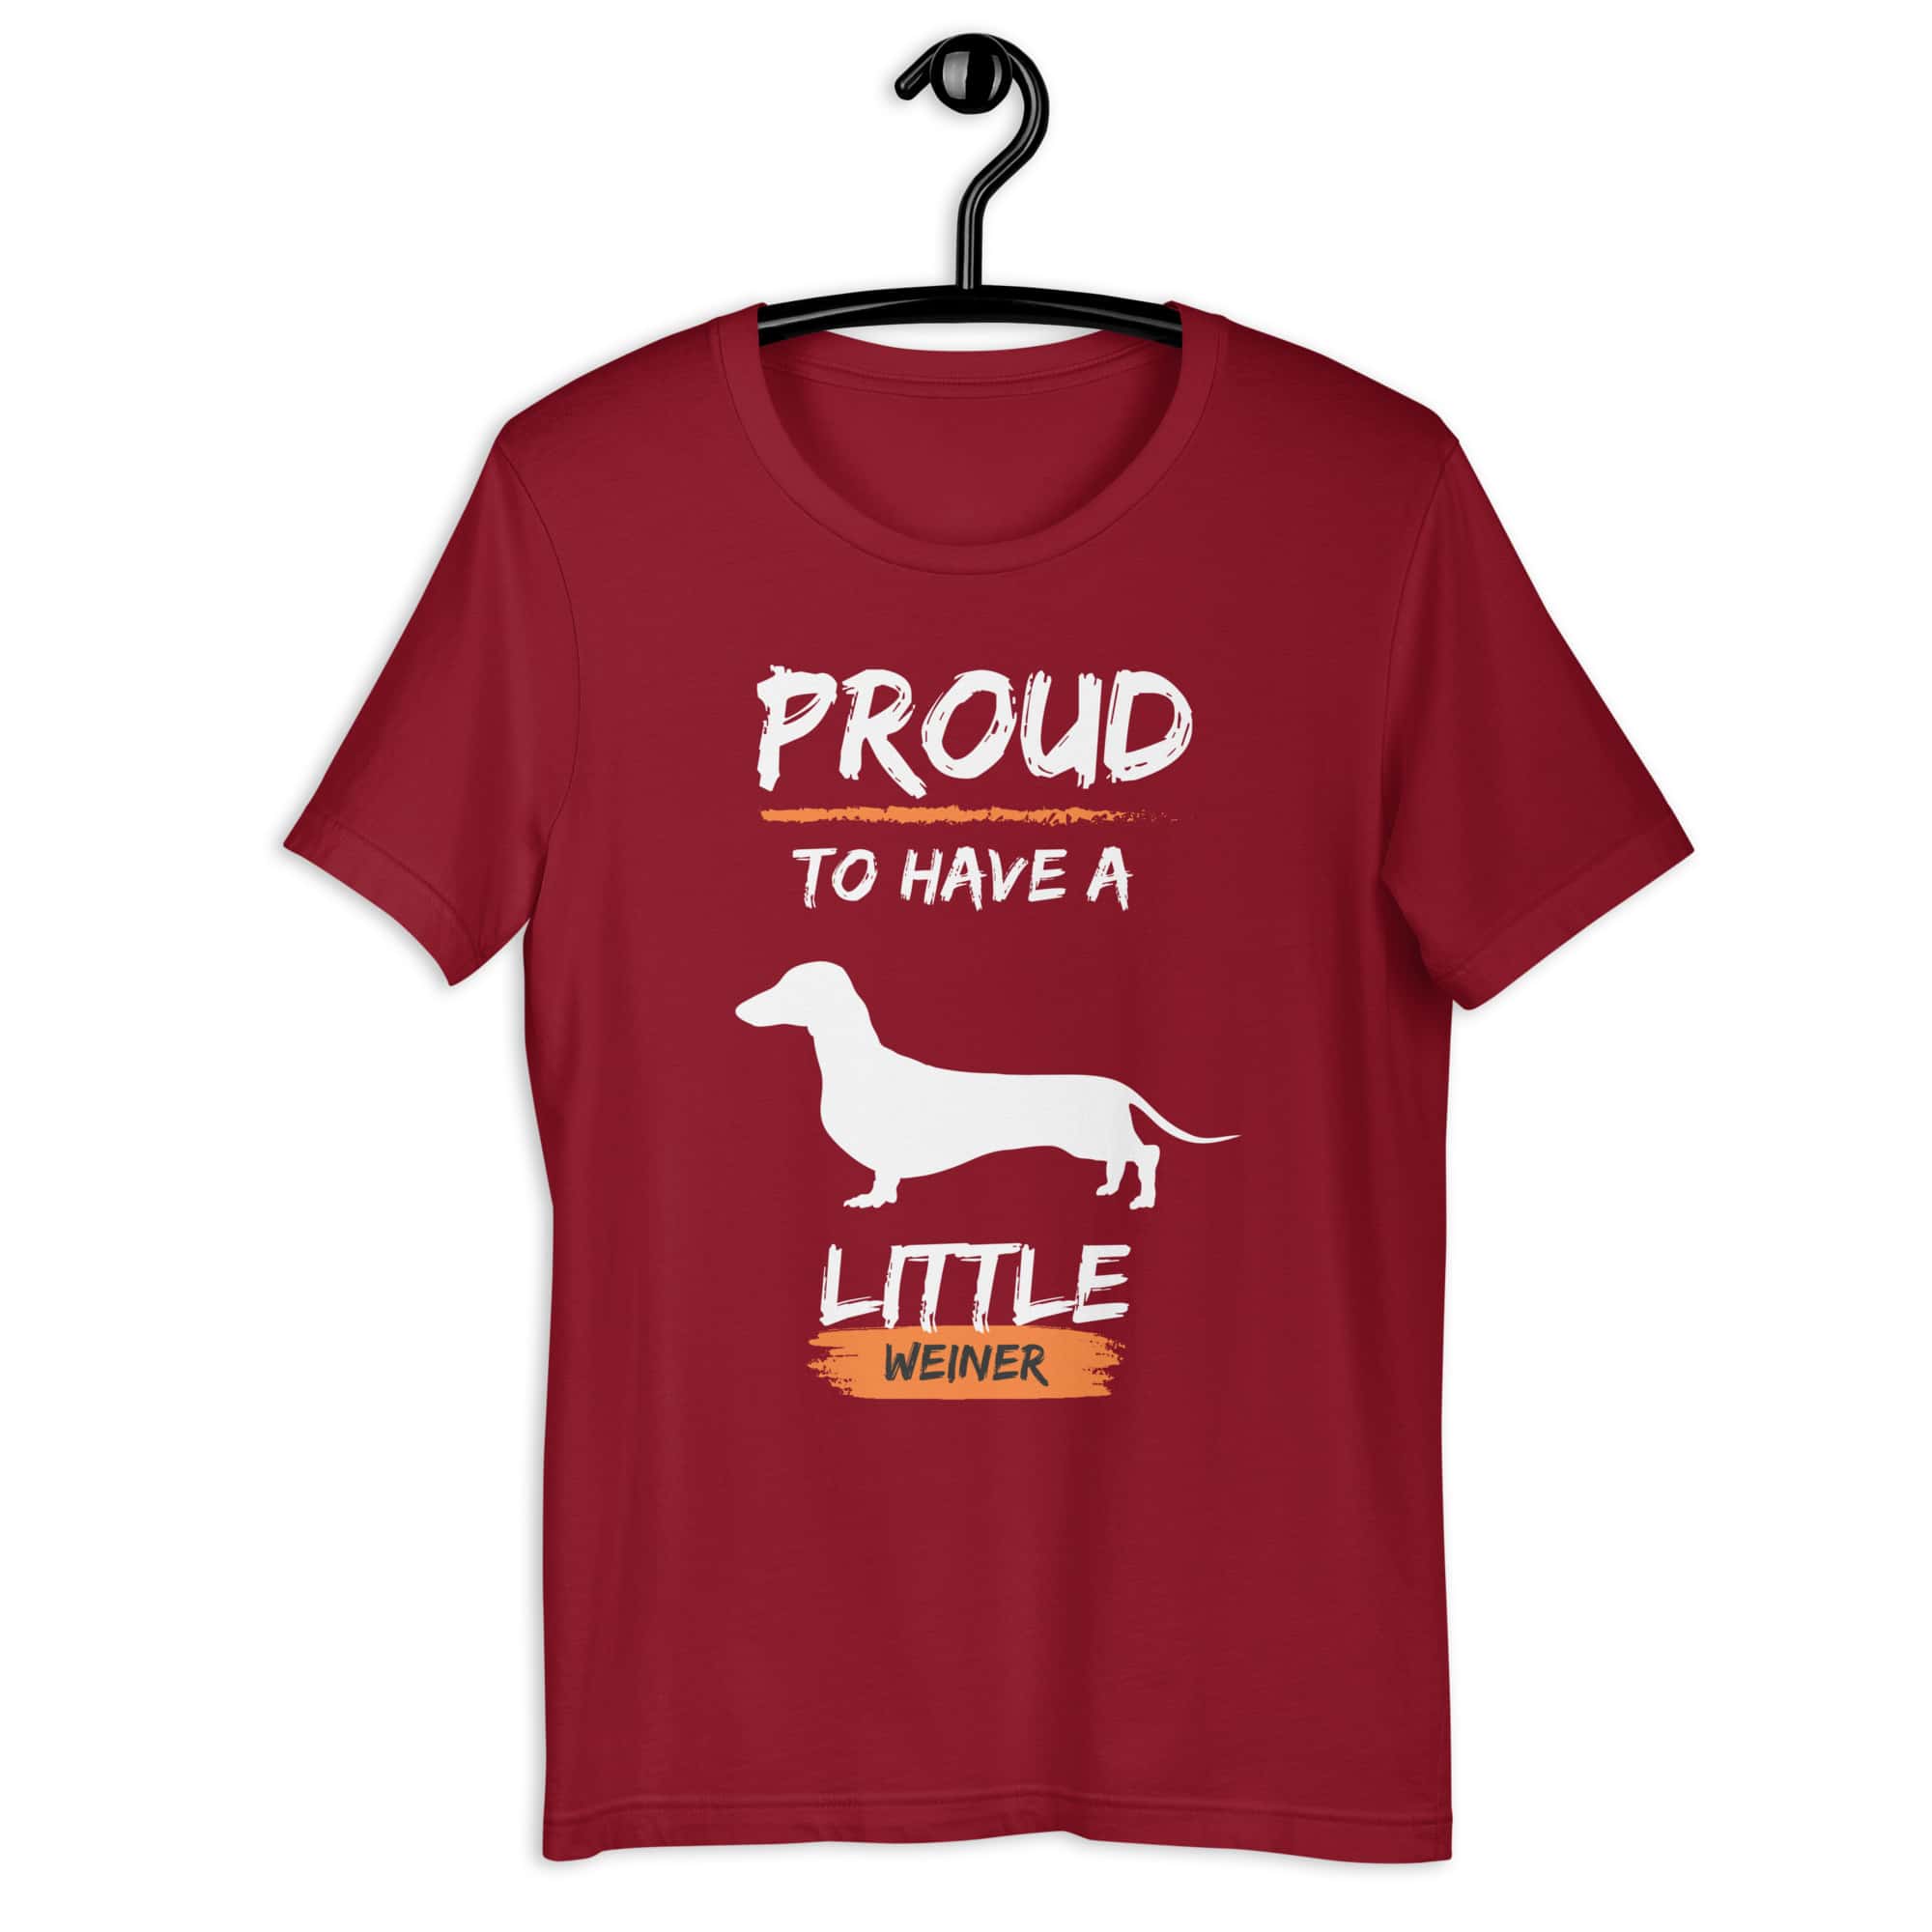 Proud To Have Little Weiner Unisex T-Shirt. Cardinal